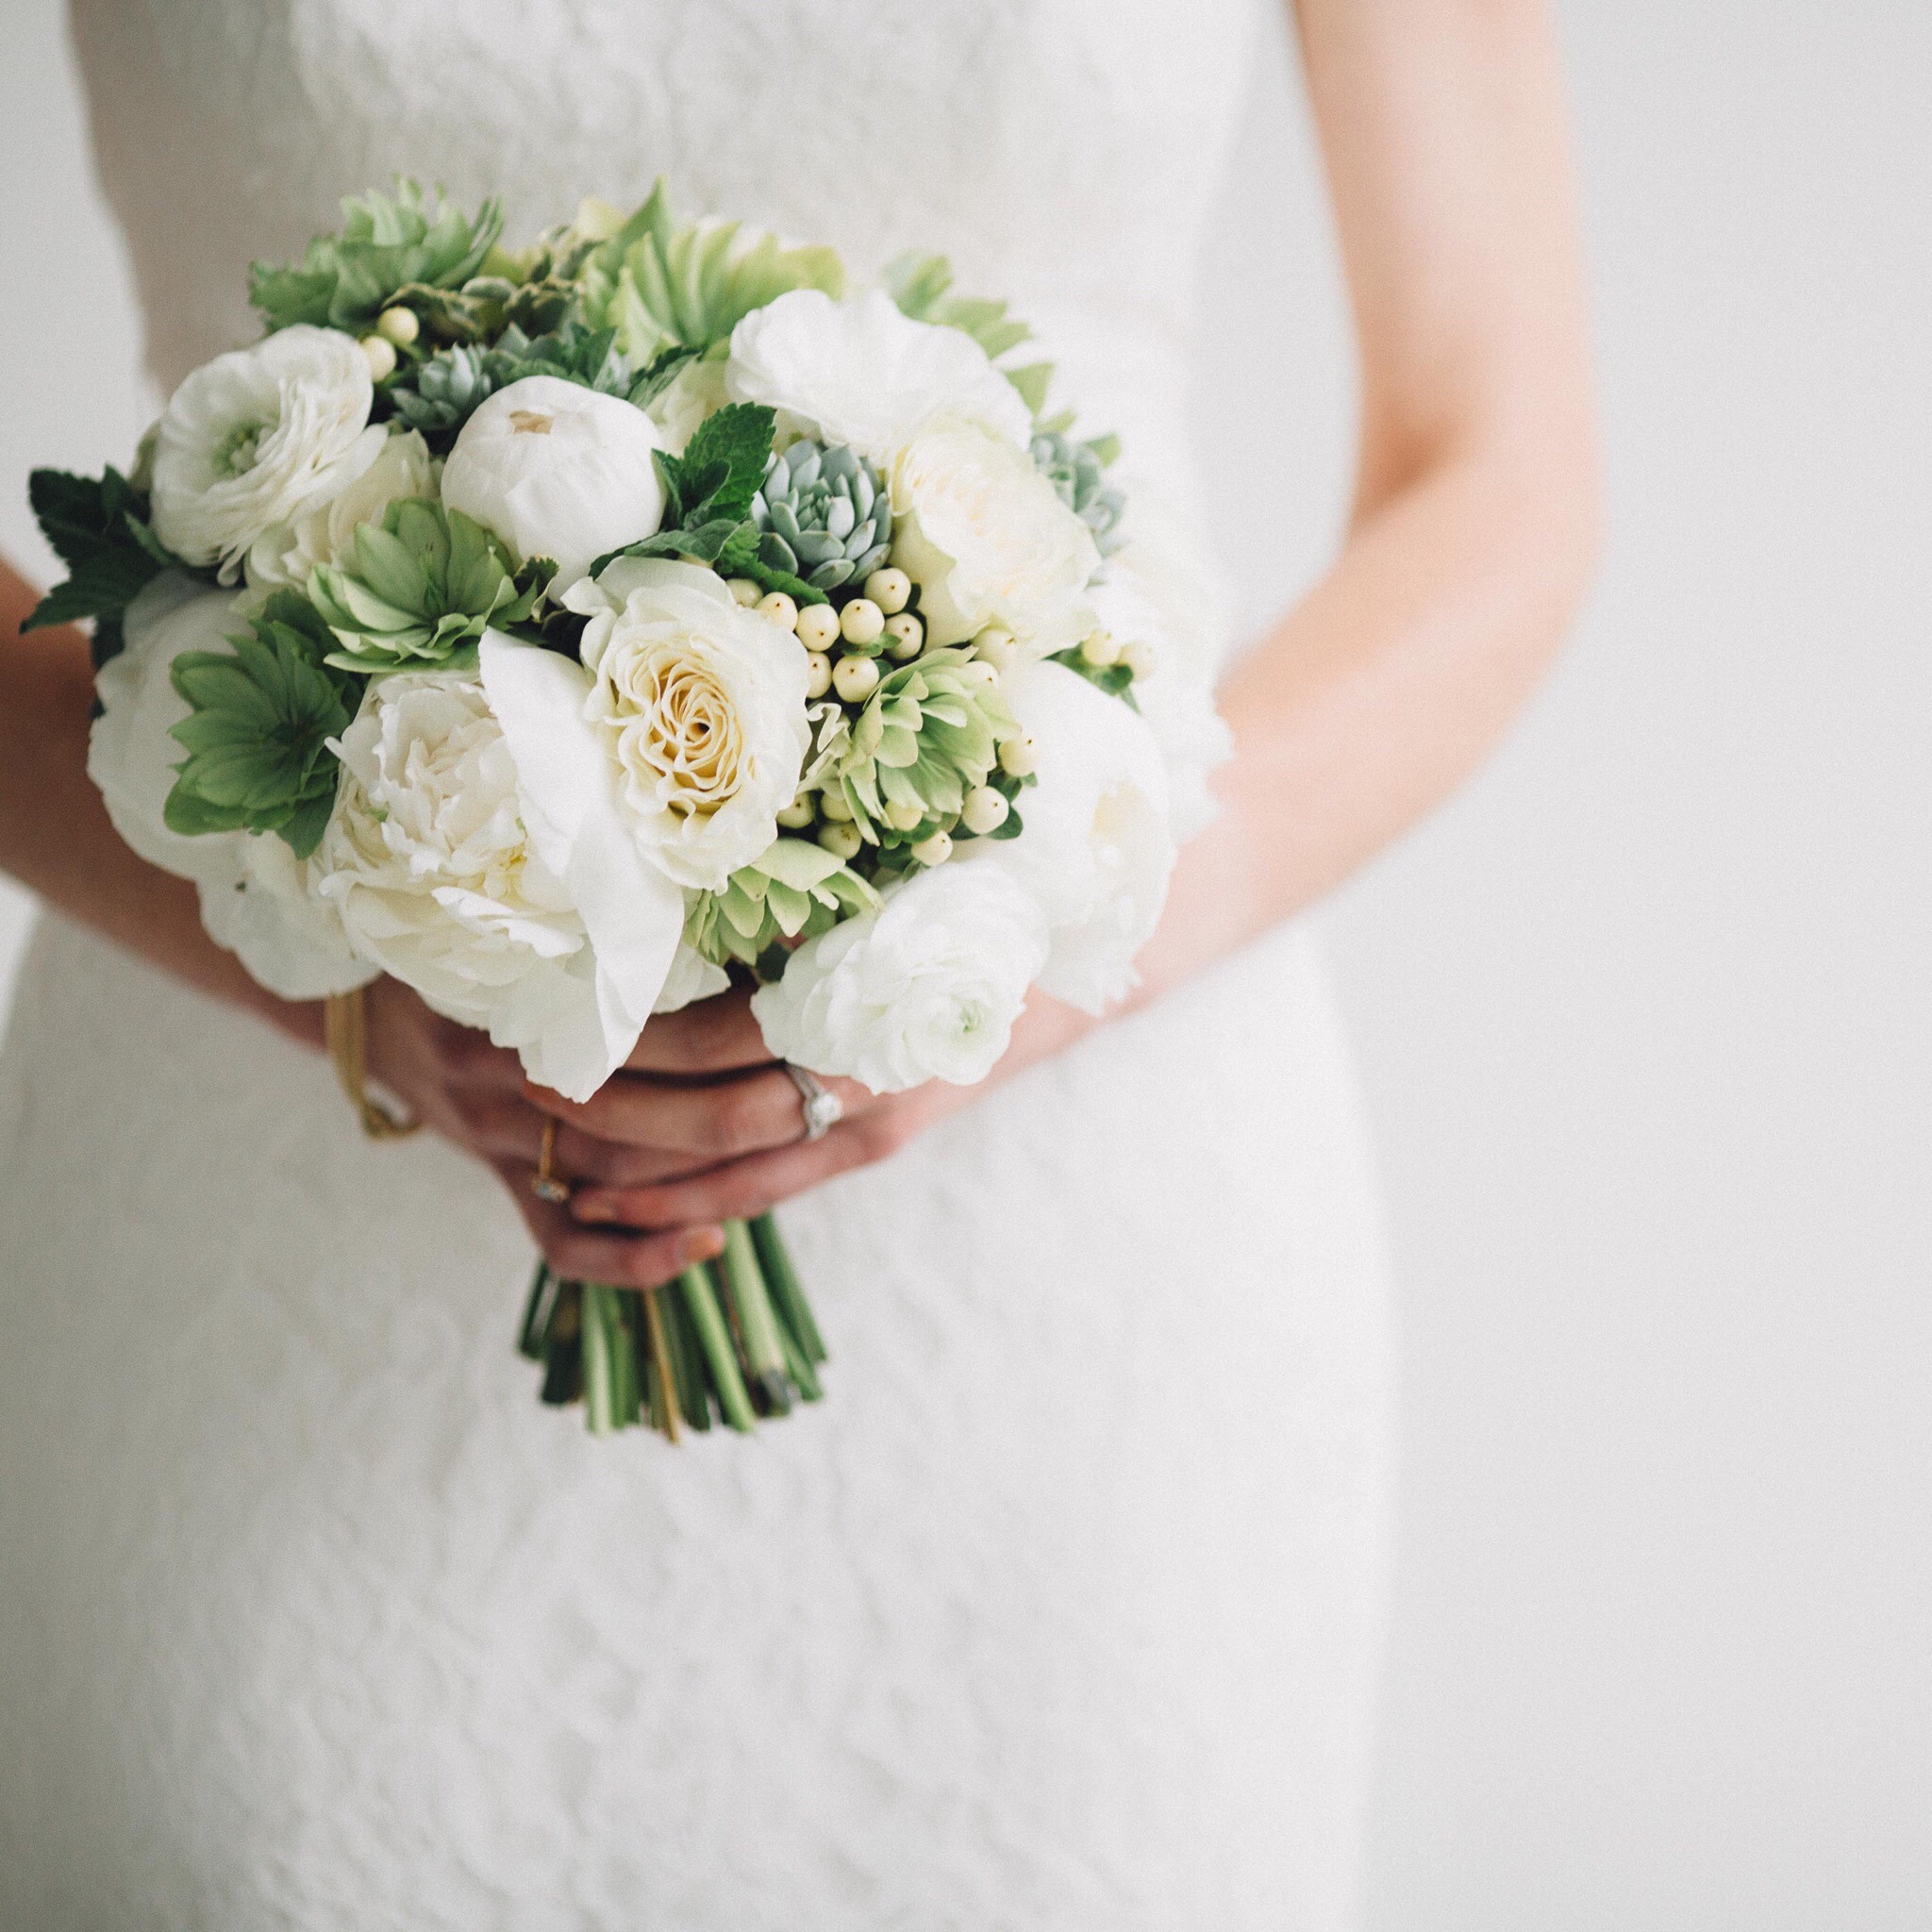 simple wedding bouquets wedding bouquets wedding flowers 4 - Choose Simple Wedding Bouquets for Your Wedding